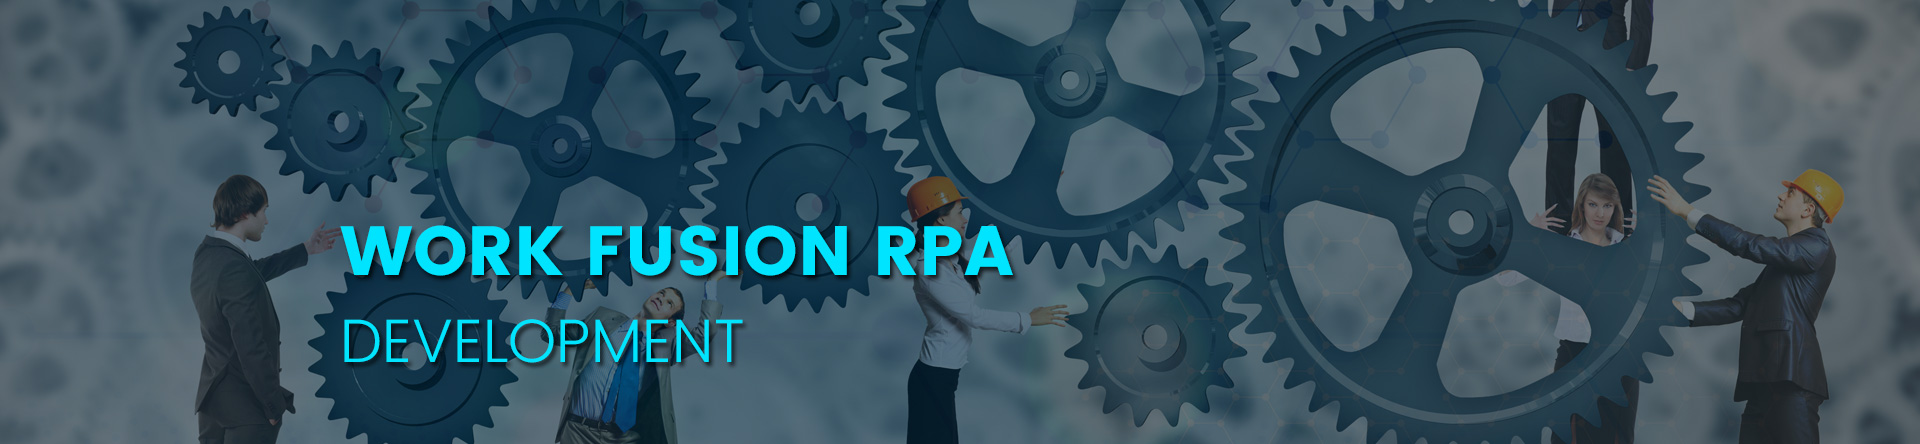 Work Fusion RPA Development